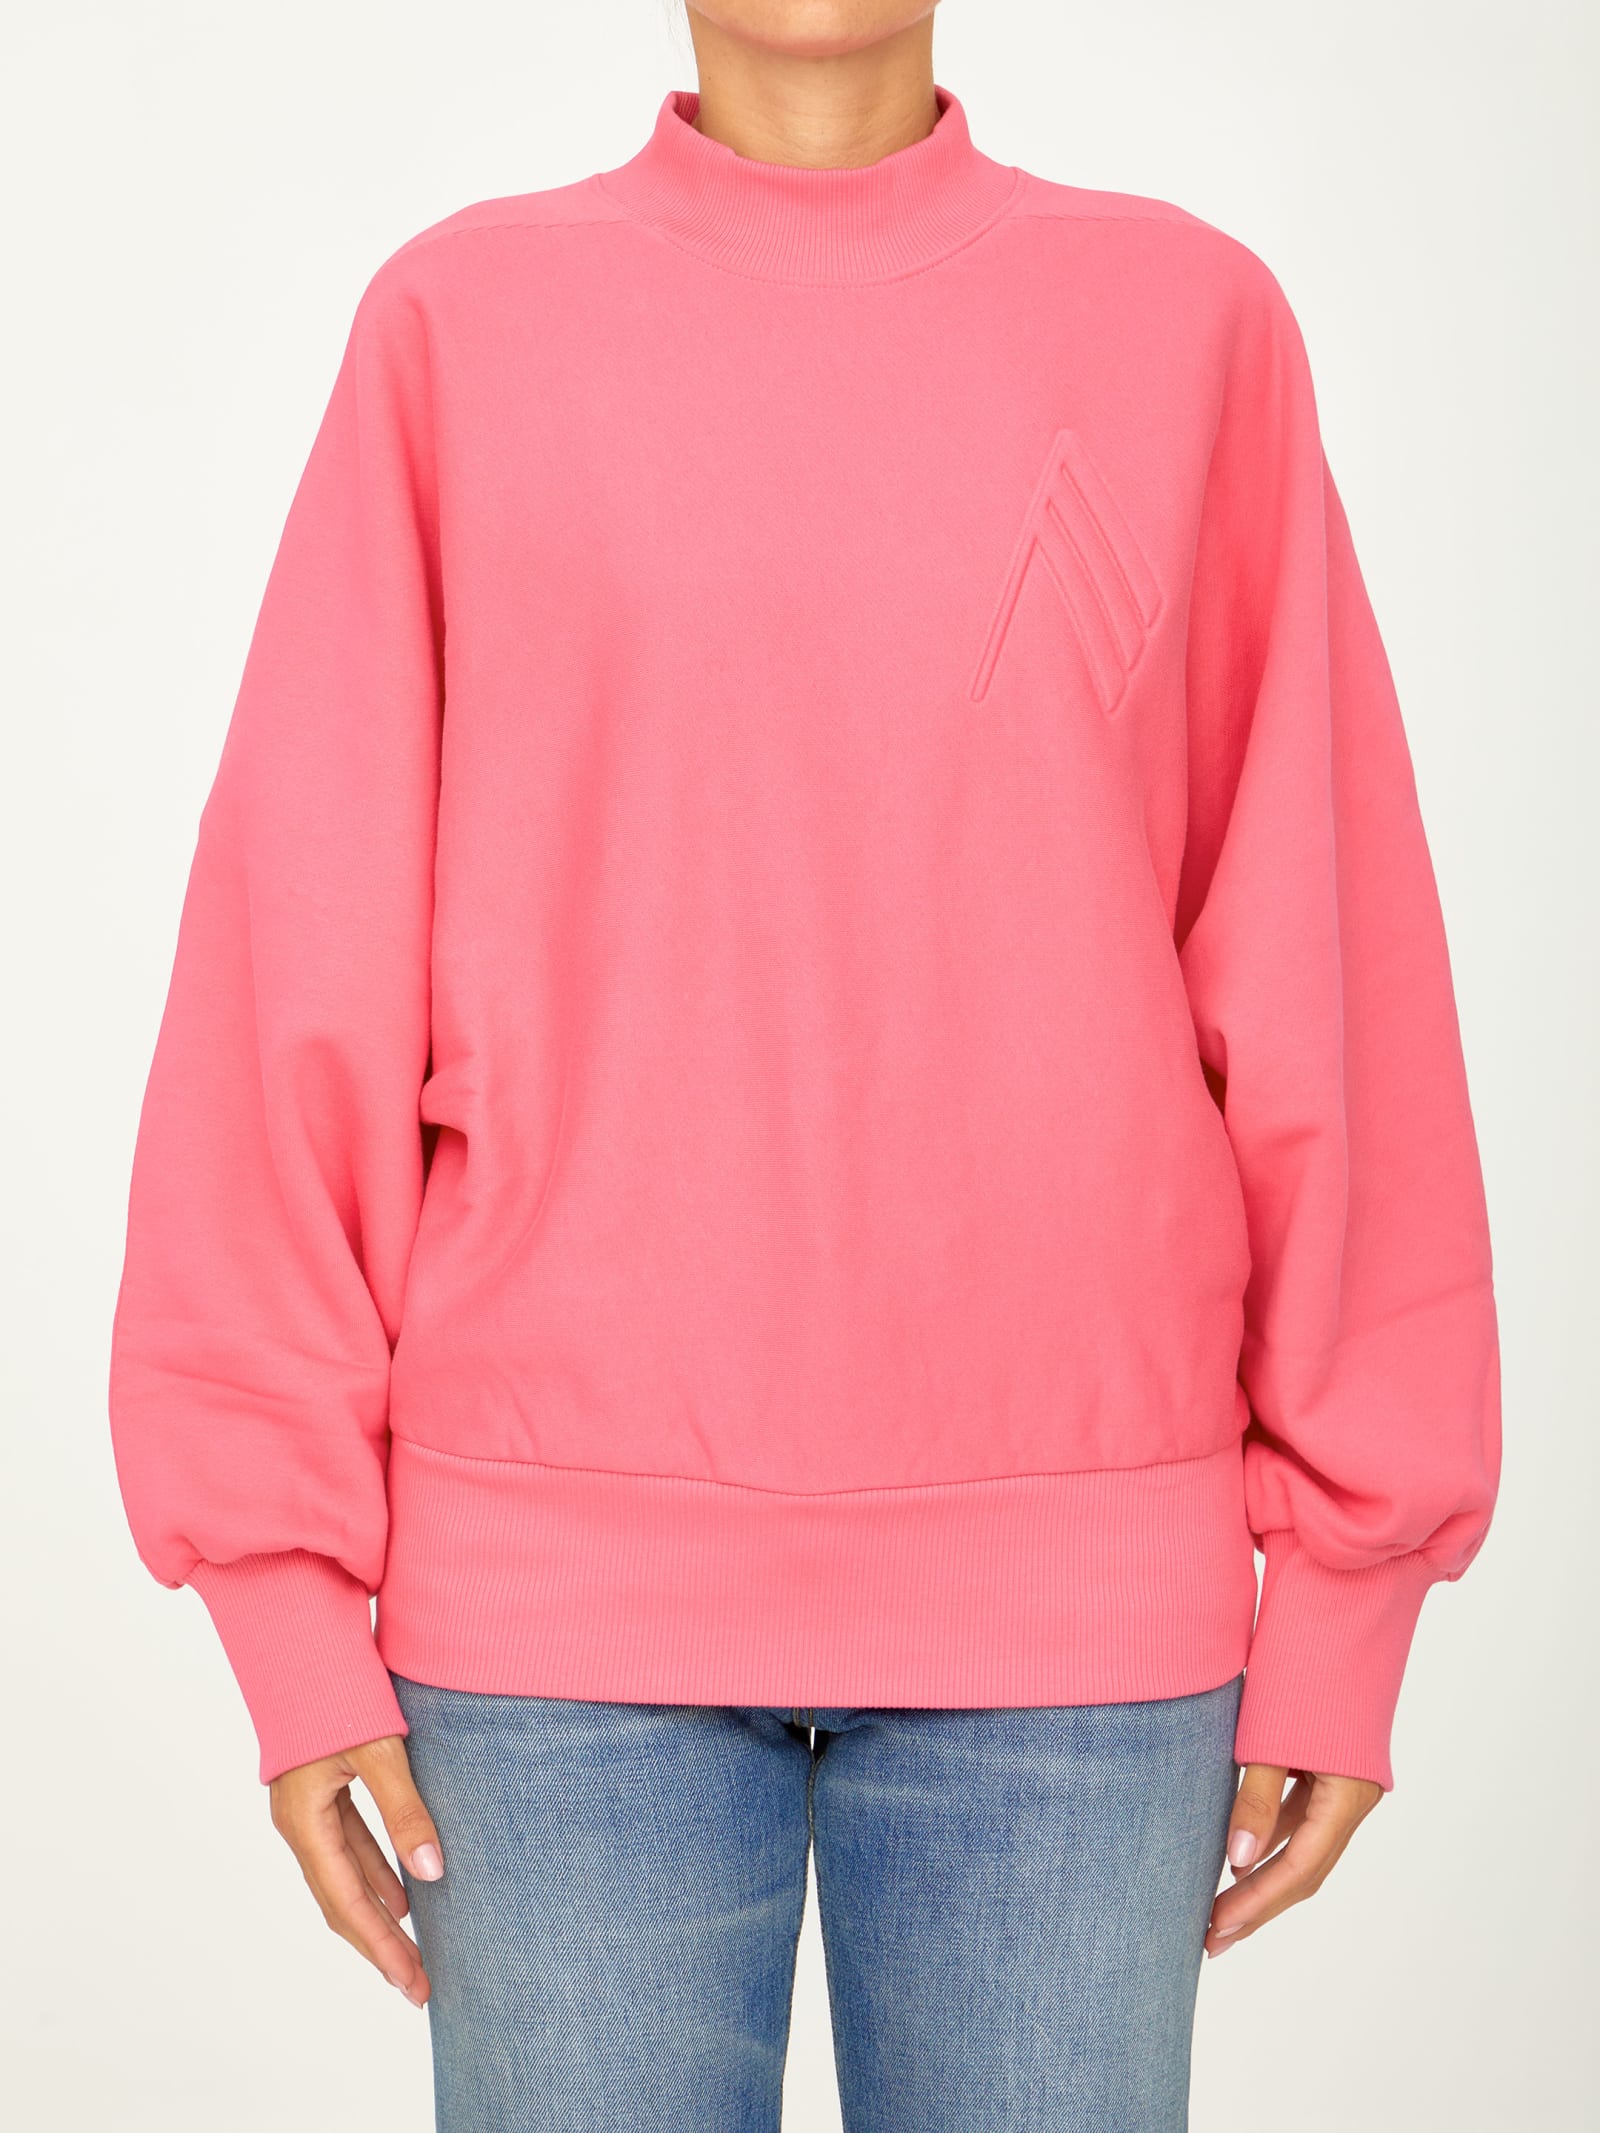 The Attico Pink Cotton Sweatshirt